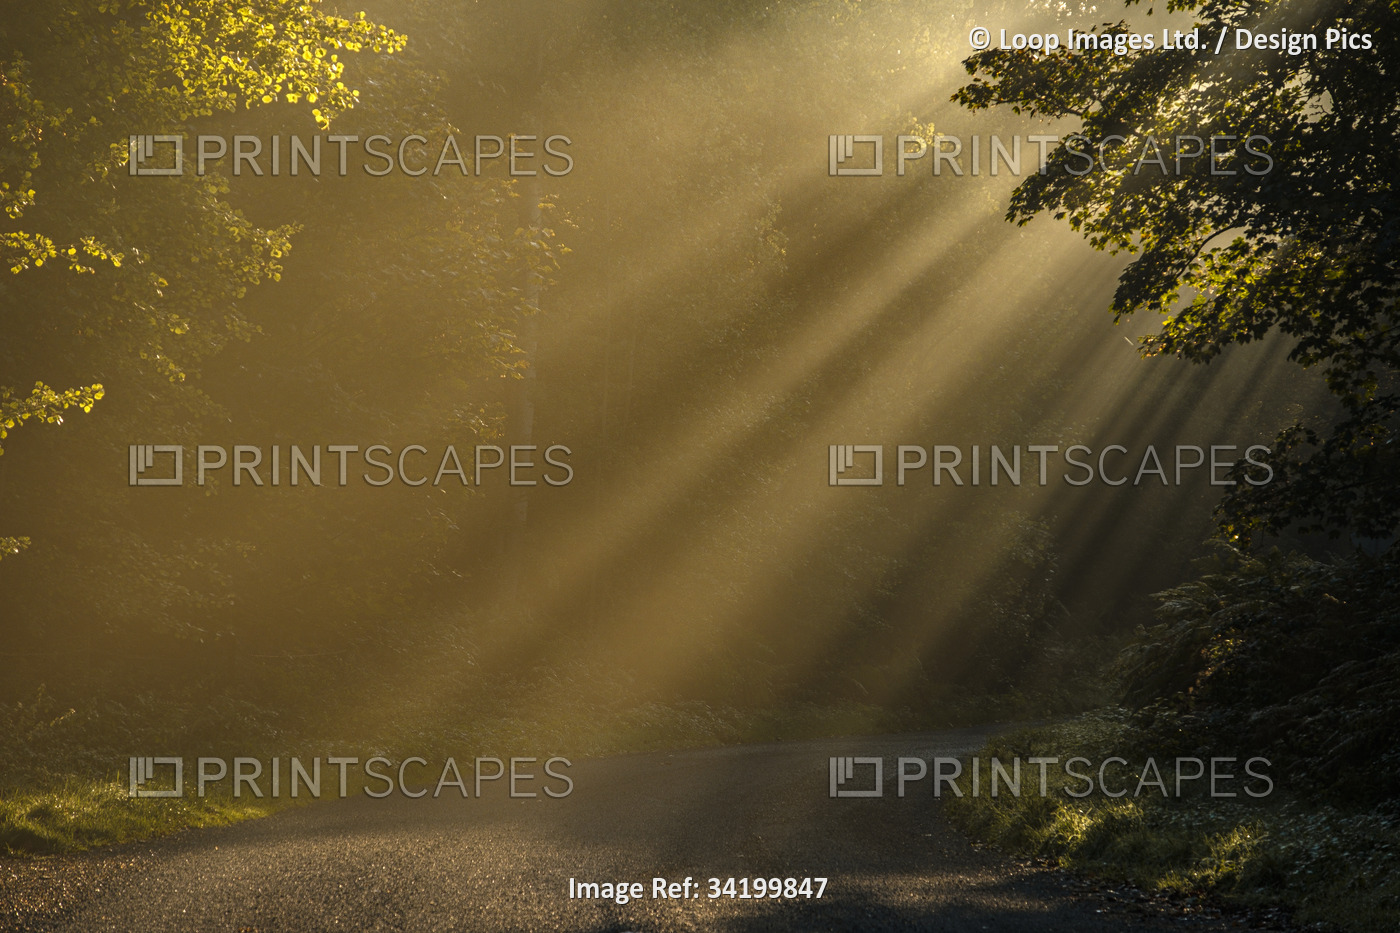 Sunbeams filter through morning mist amongst the trees at Sandringham.